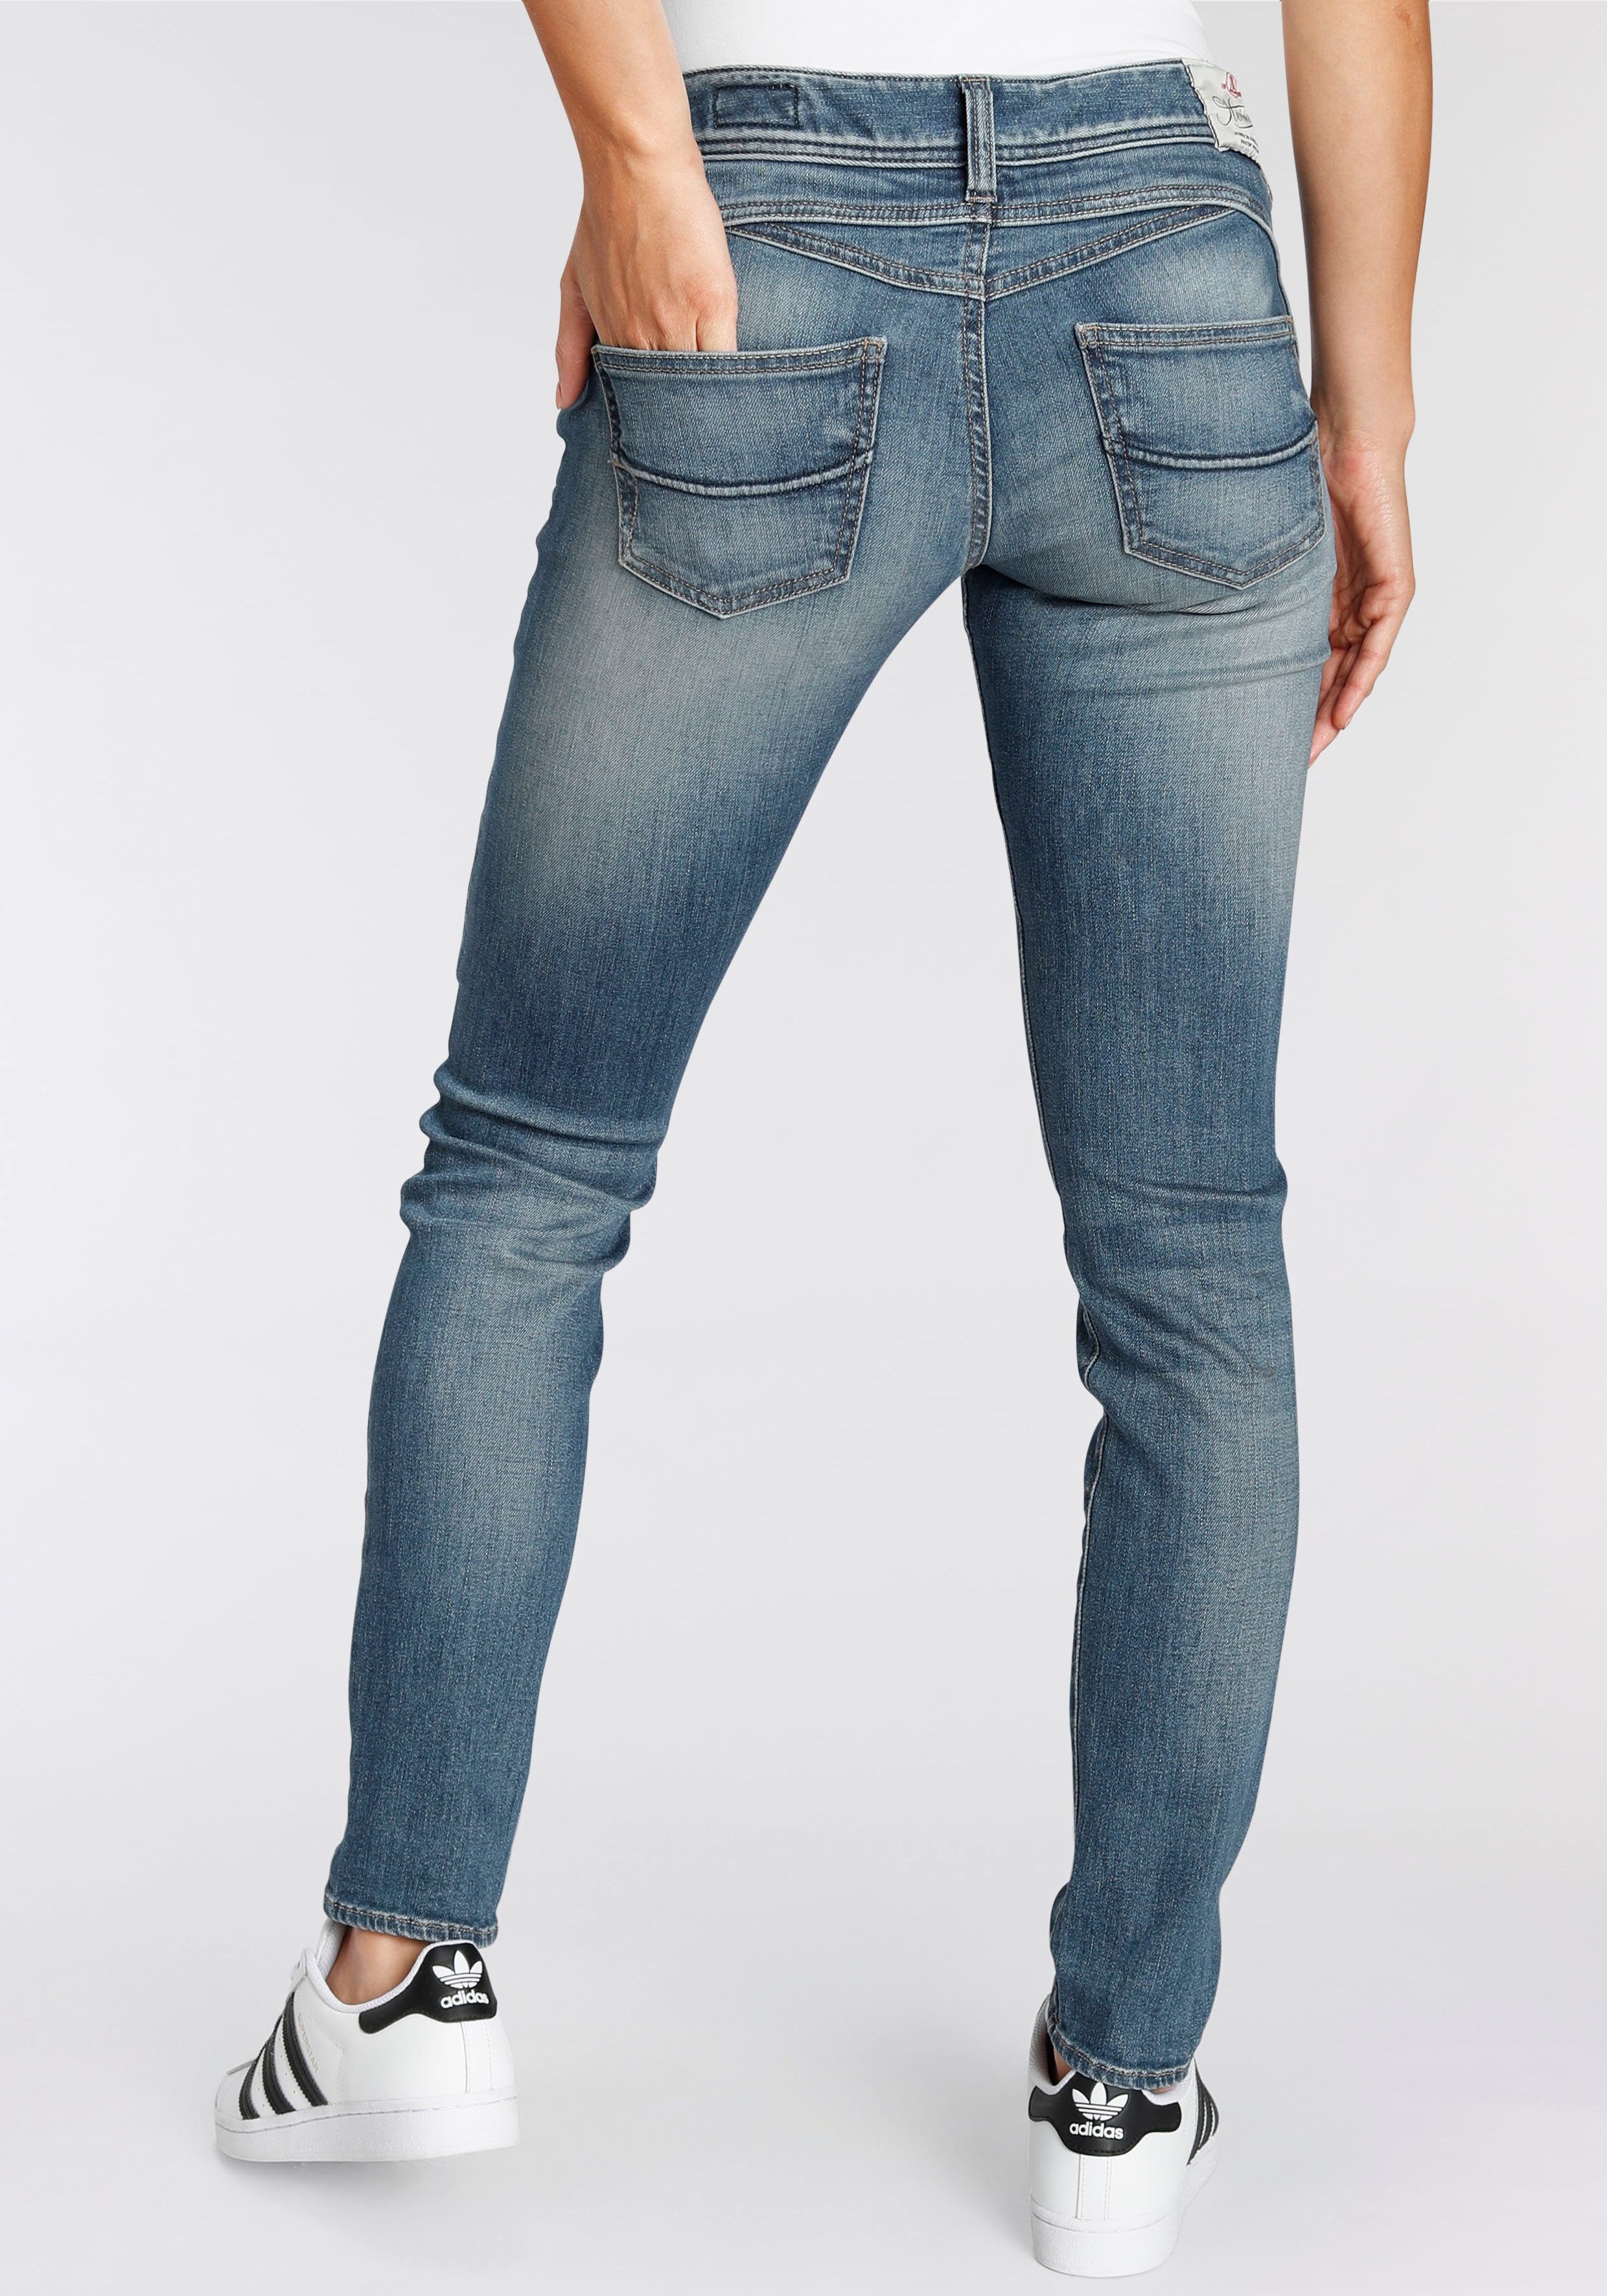 Herrlicher Slim-fit-Jeans GILA SLIM ORGANIC DENIM umweltfreundlich dank Kitotex Technology blue sea | Stretchjeans